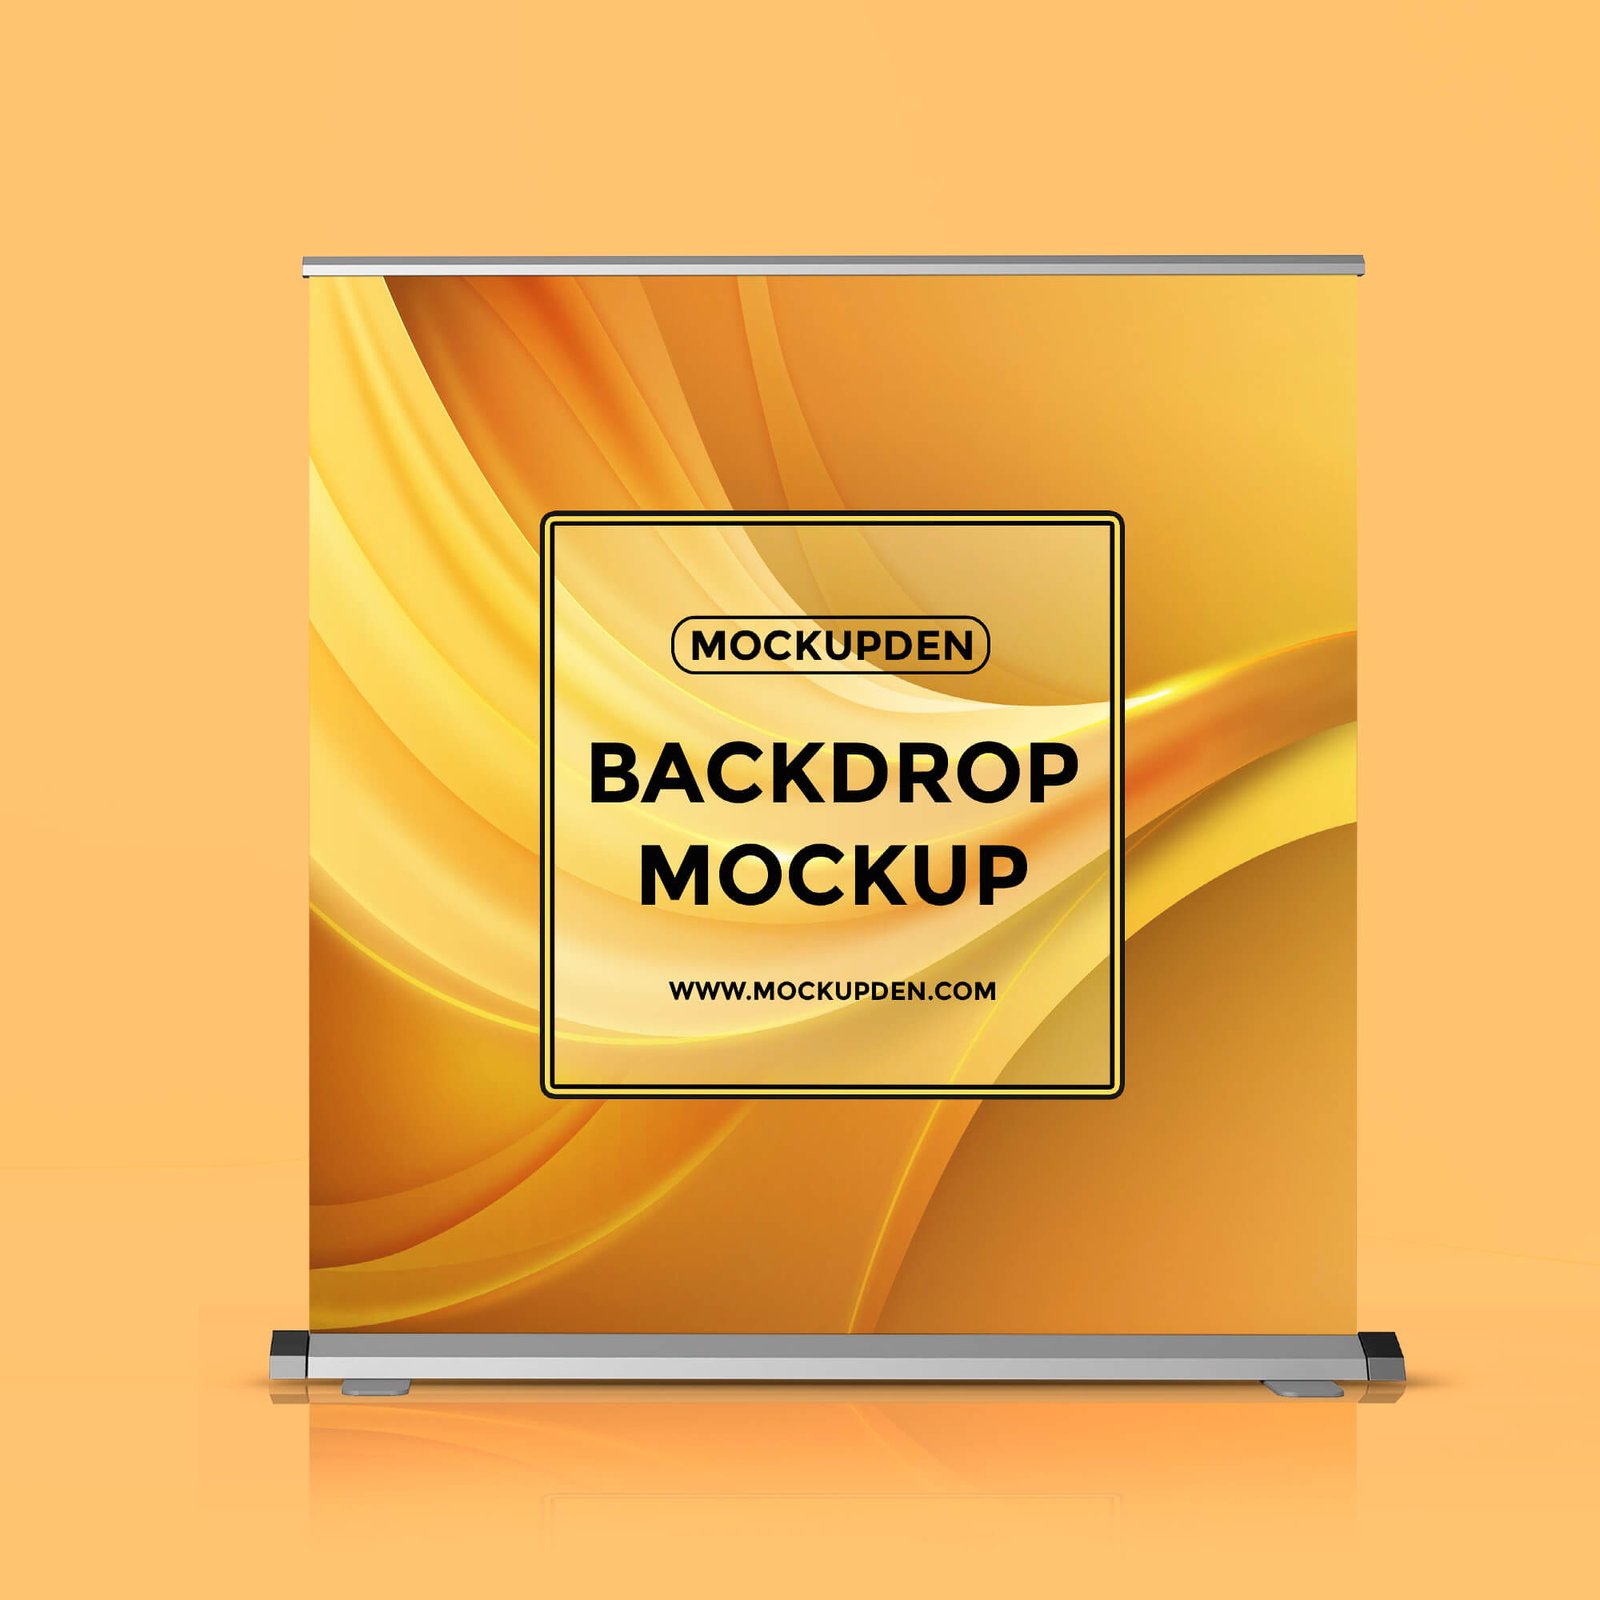 Design Free Backdrop Mockup PSD Template